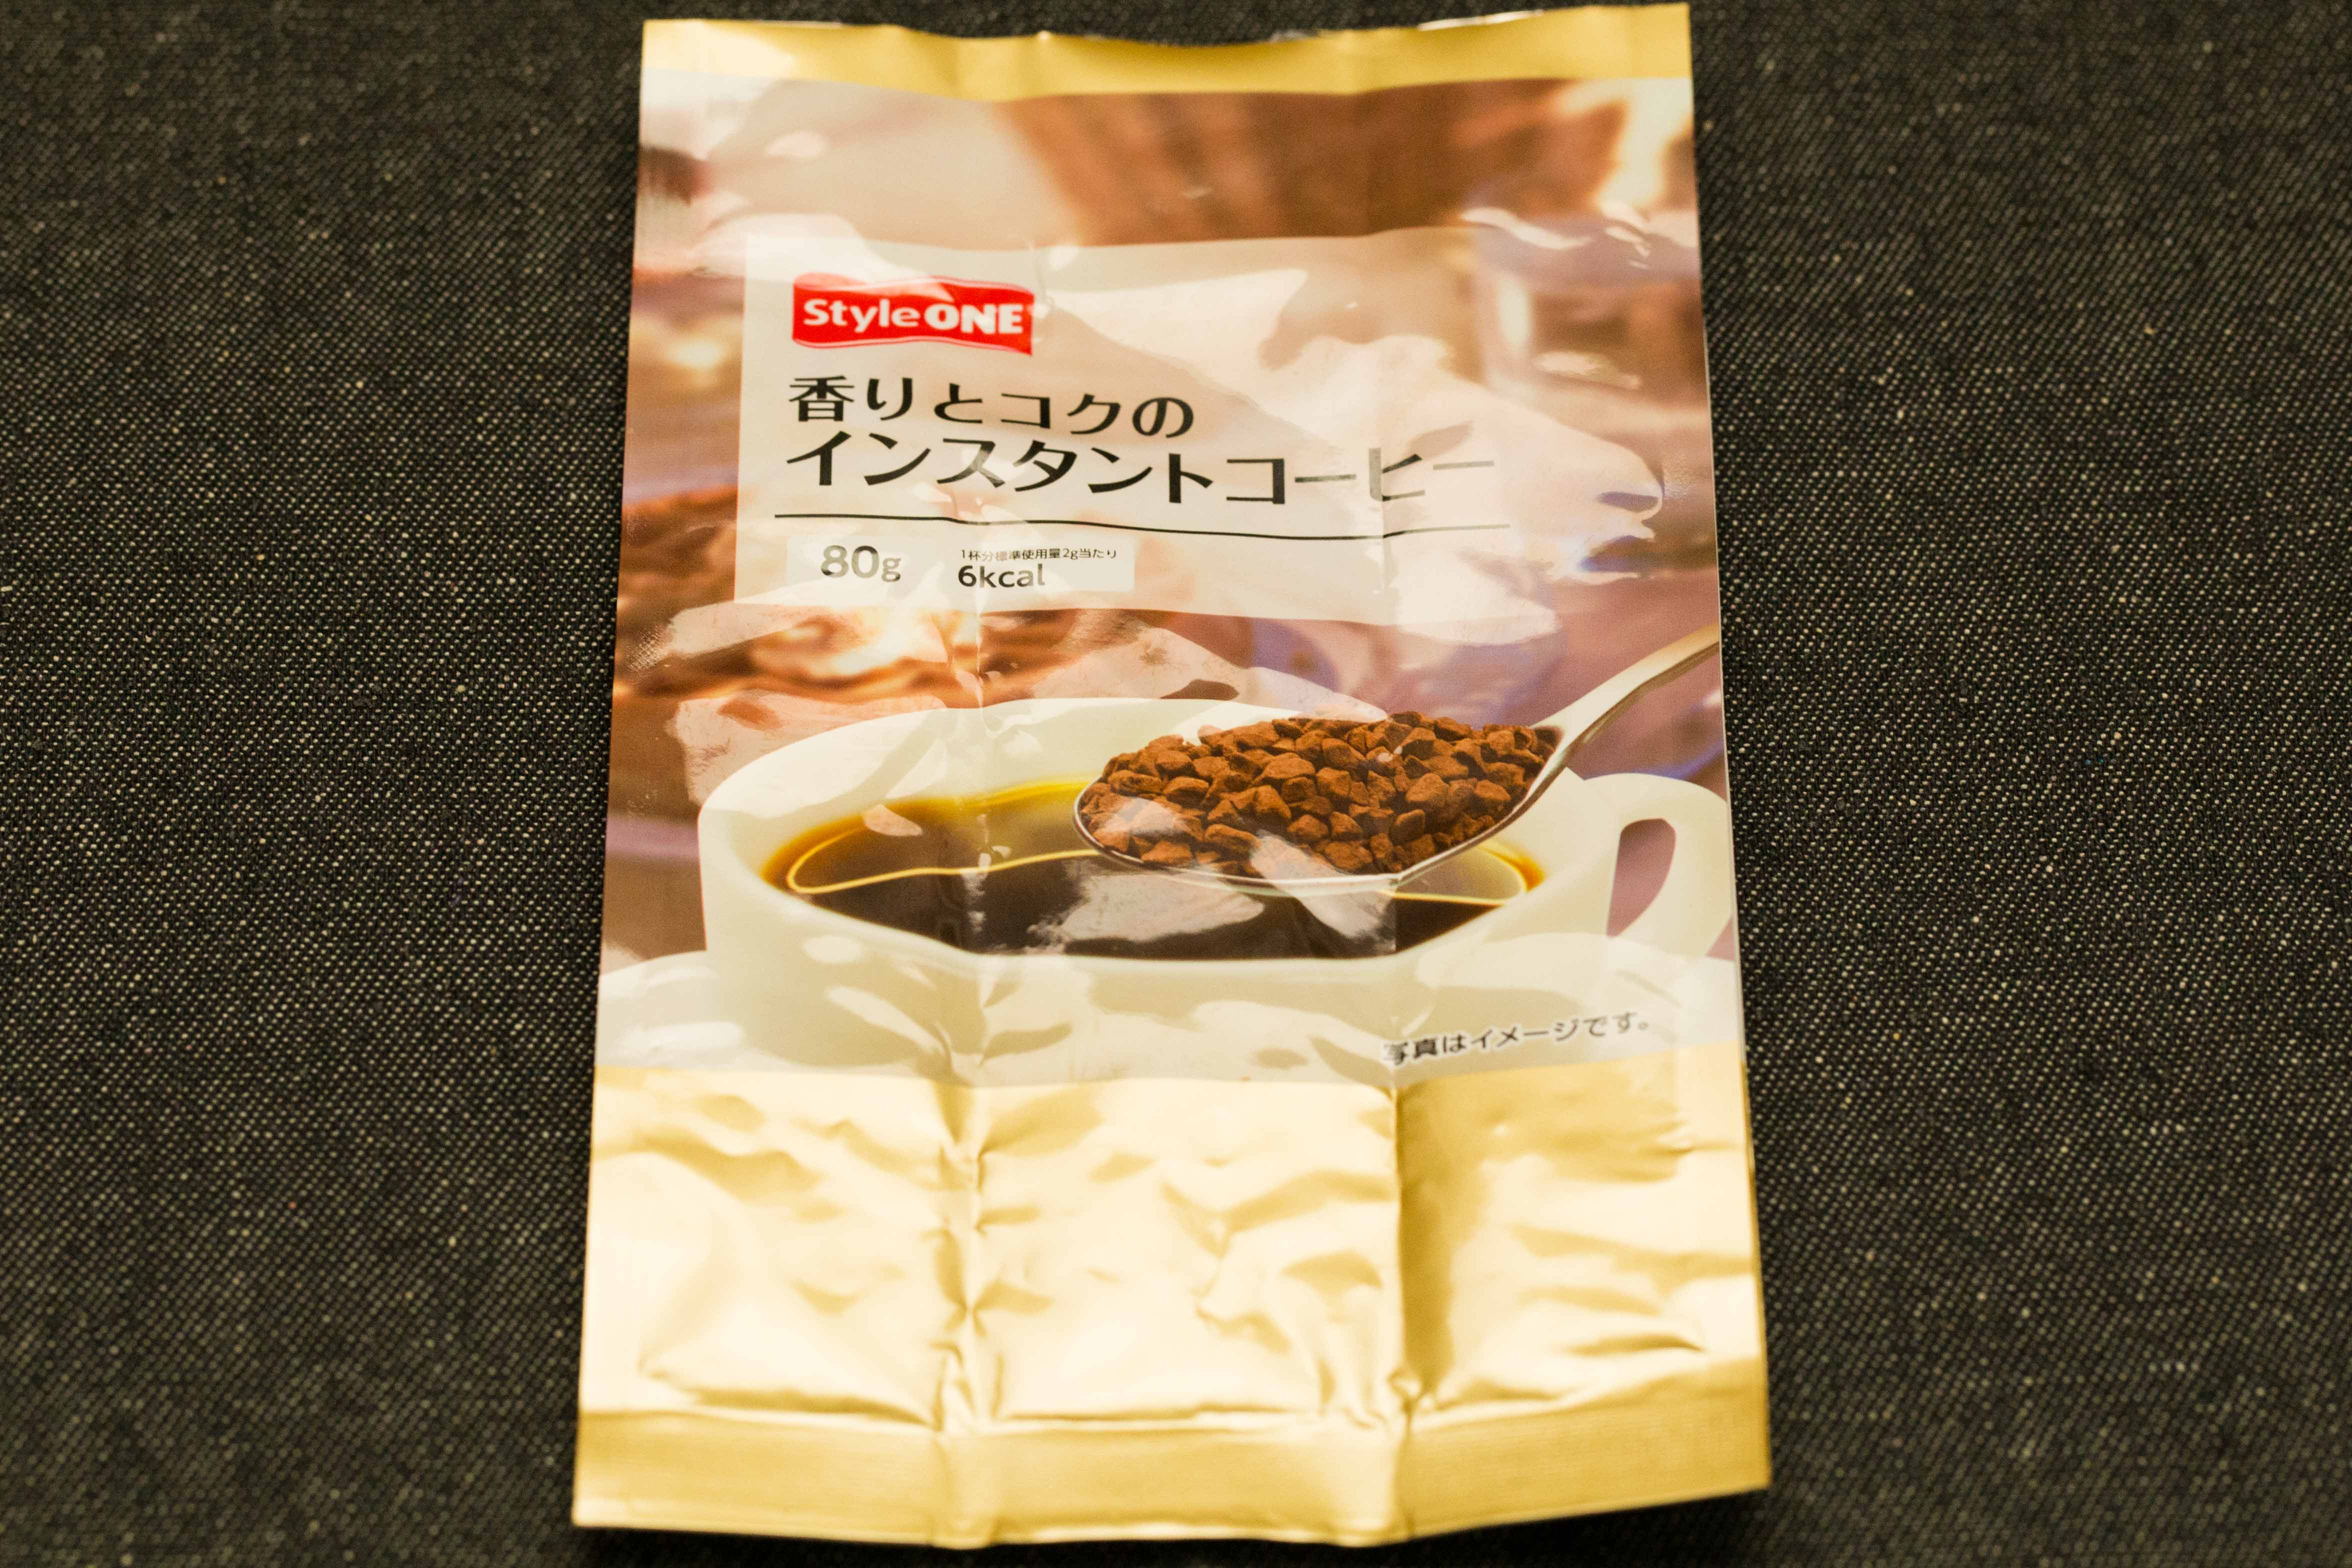 Style ONE(スタイルワン)のインスタントコーヒーは１杯約８円のコストパフォーマンス